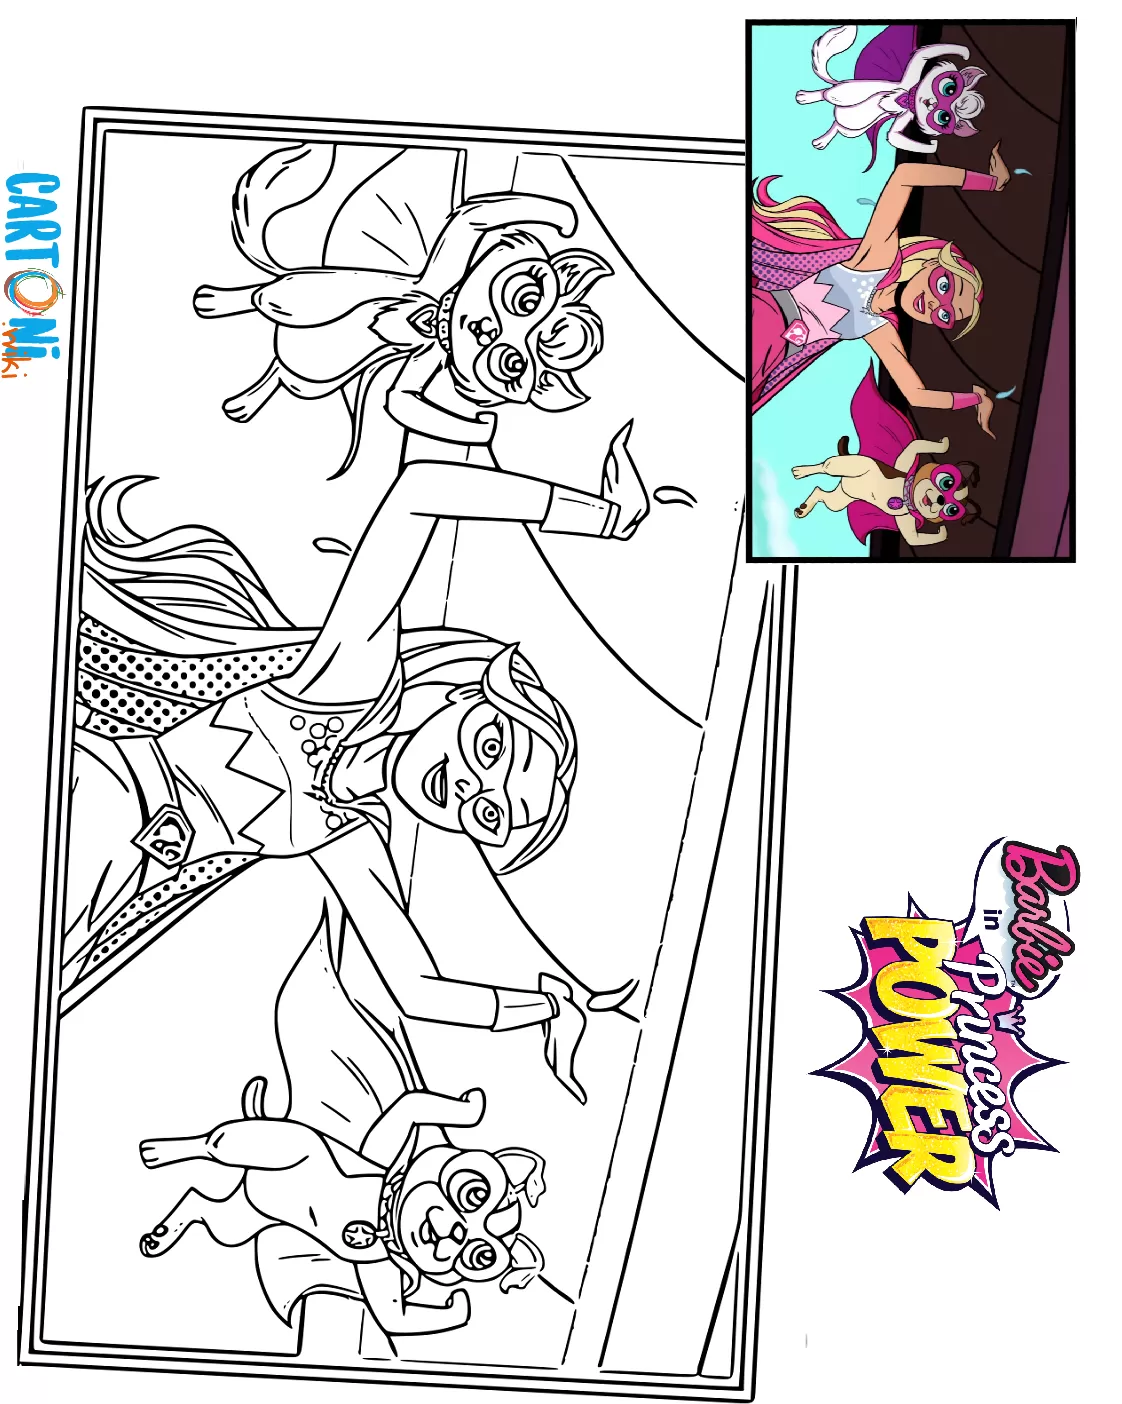 Barbie Princess Power coloring book